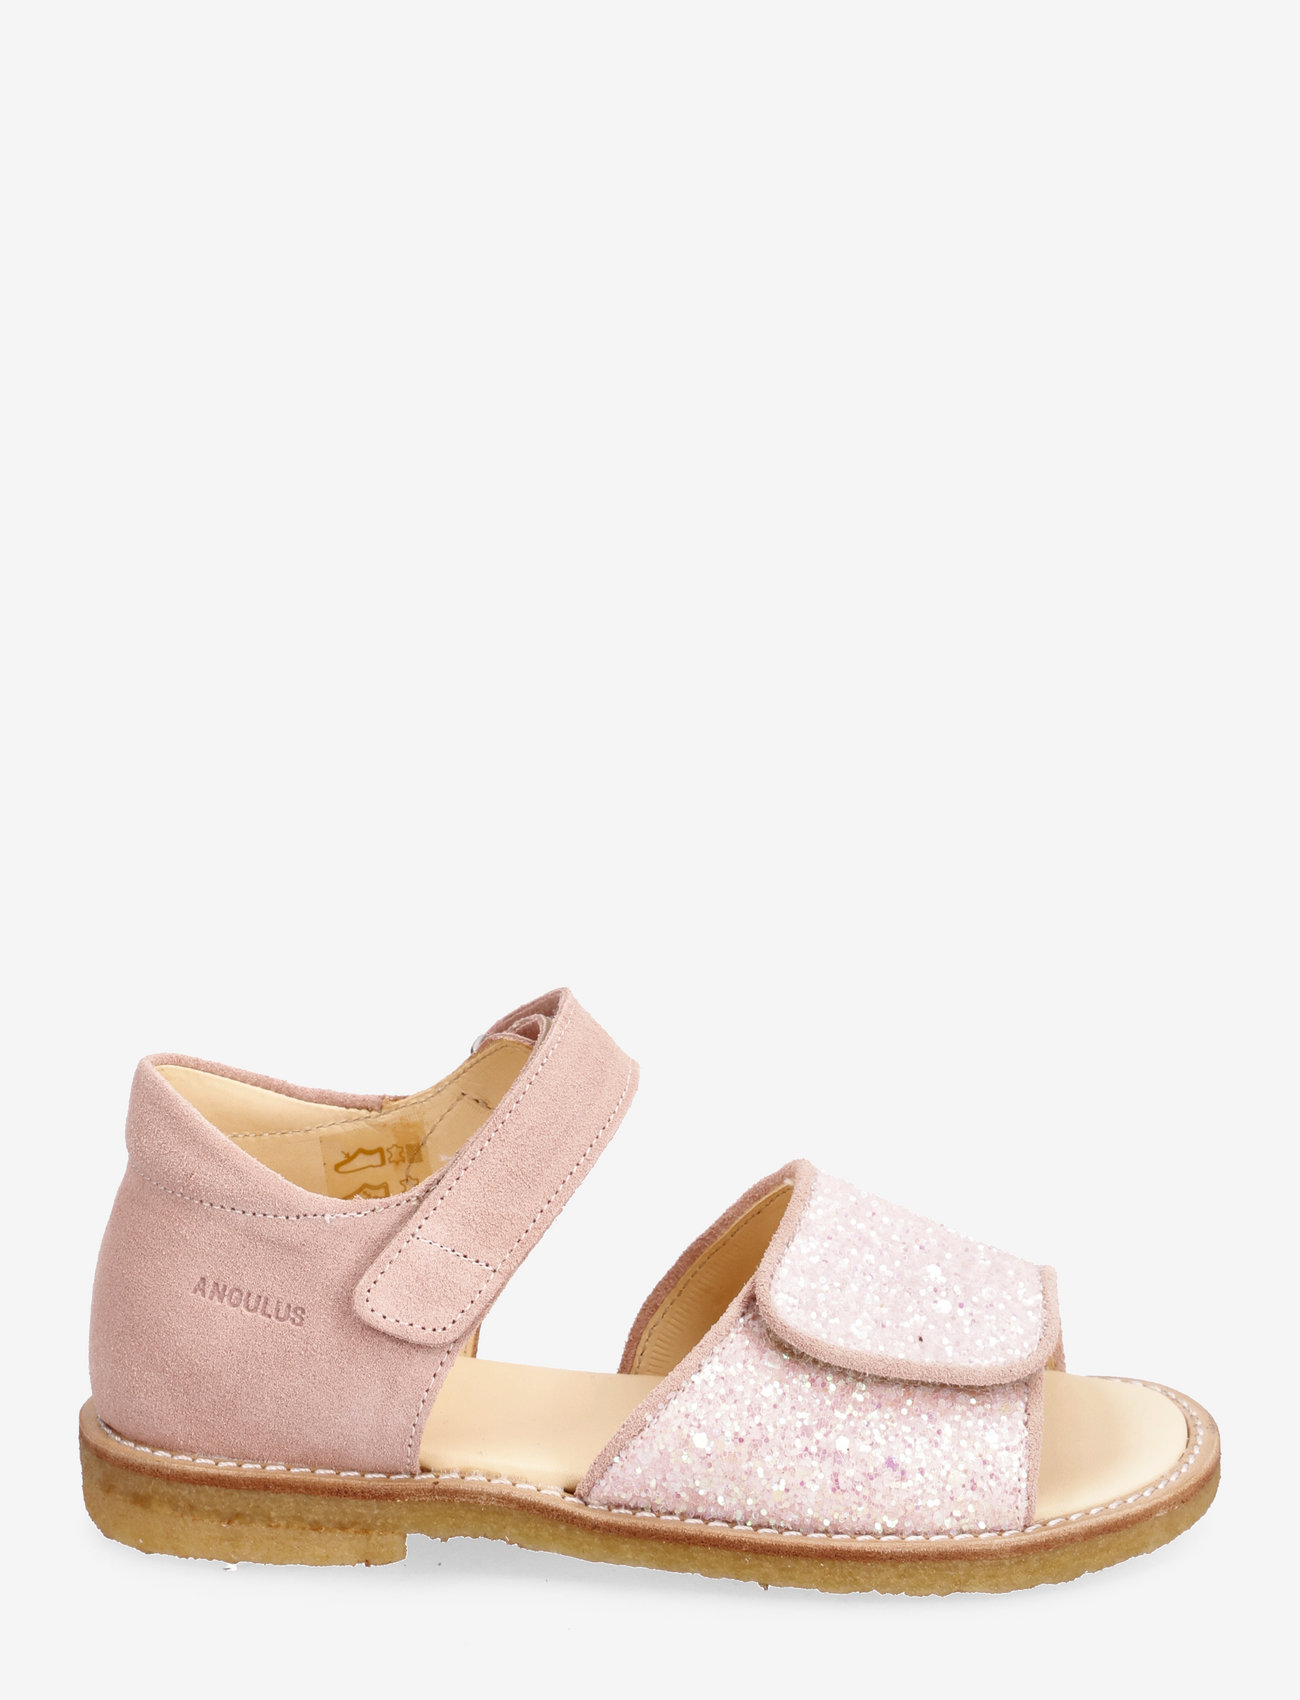 ANGULUS - Sandals - flat - open toe - clo - sommarfynd - 1139/2698 peach/rosa glitter - 1